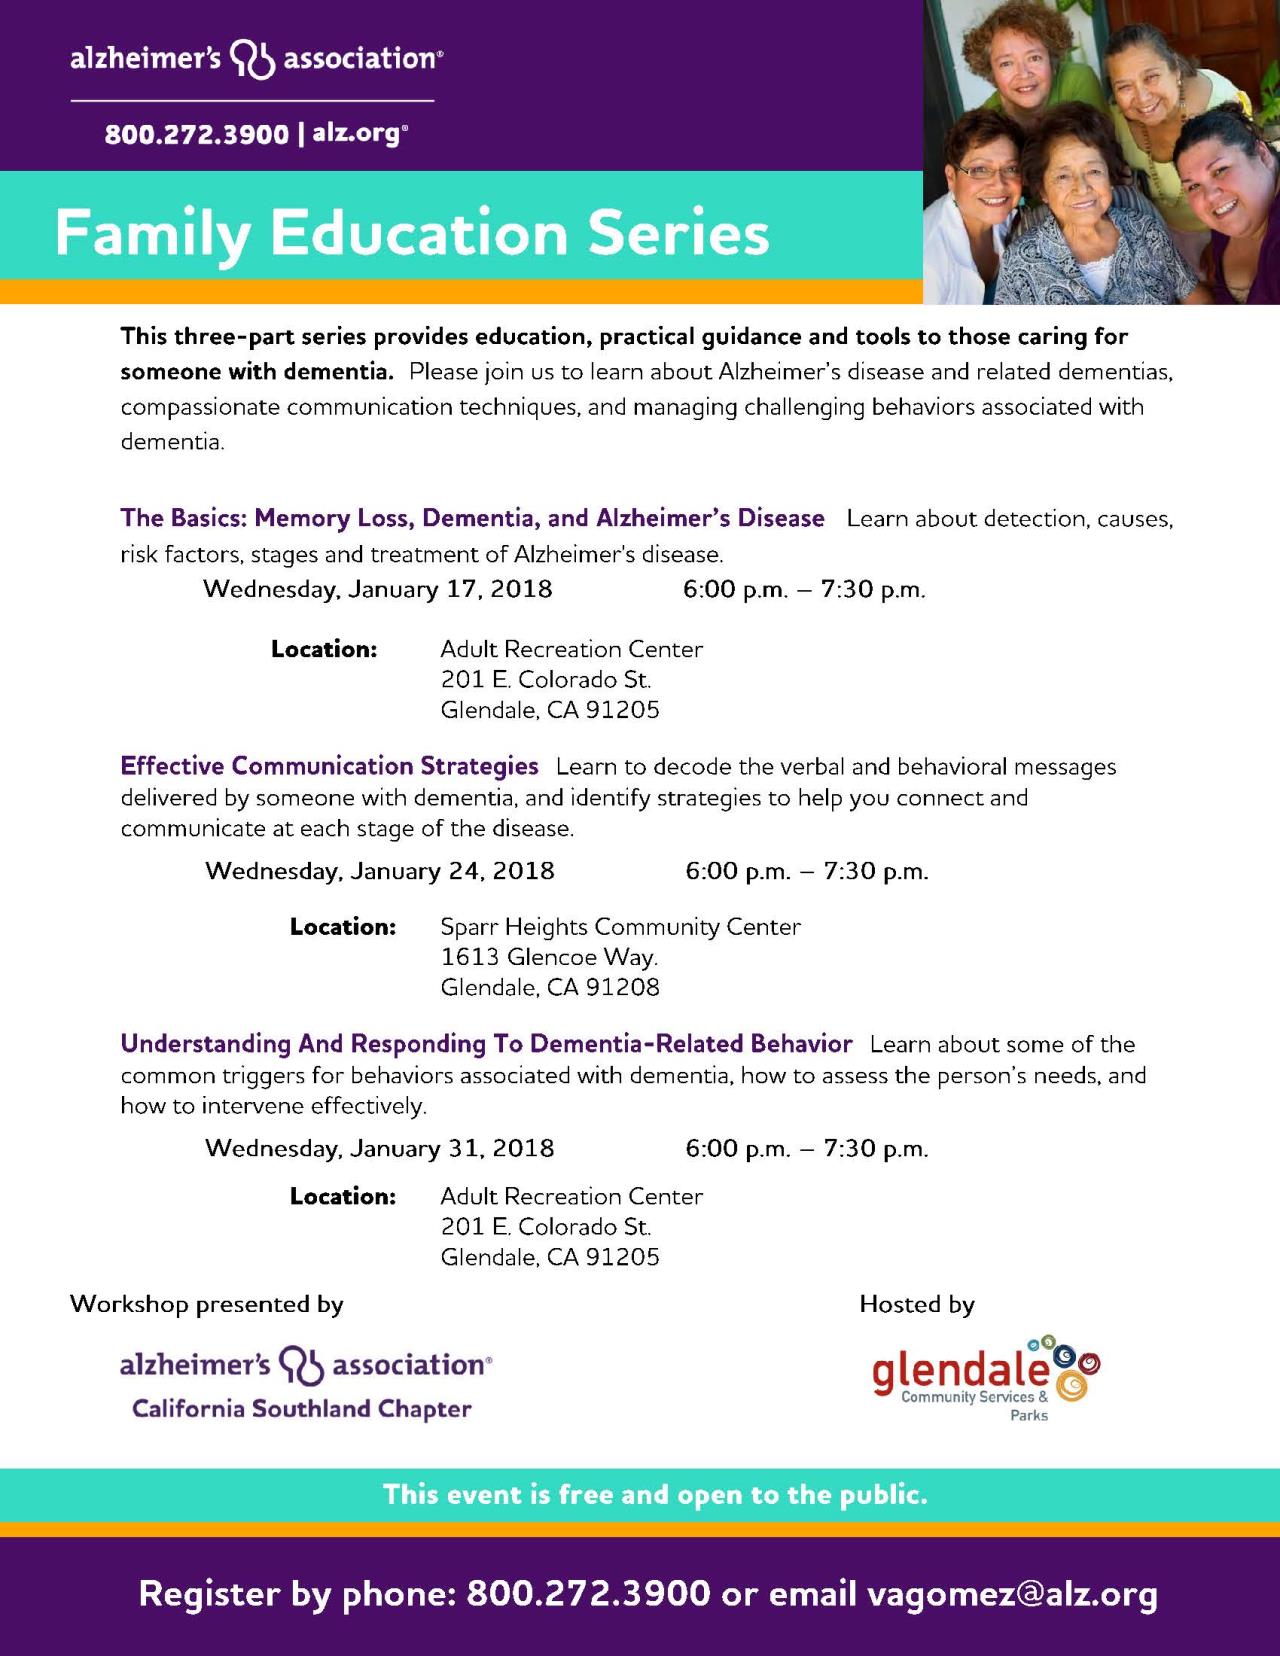 EDU - Family Education Series - Glendale January 2018 updated 9.18.17 VG